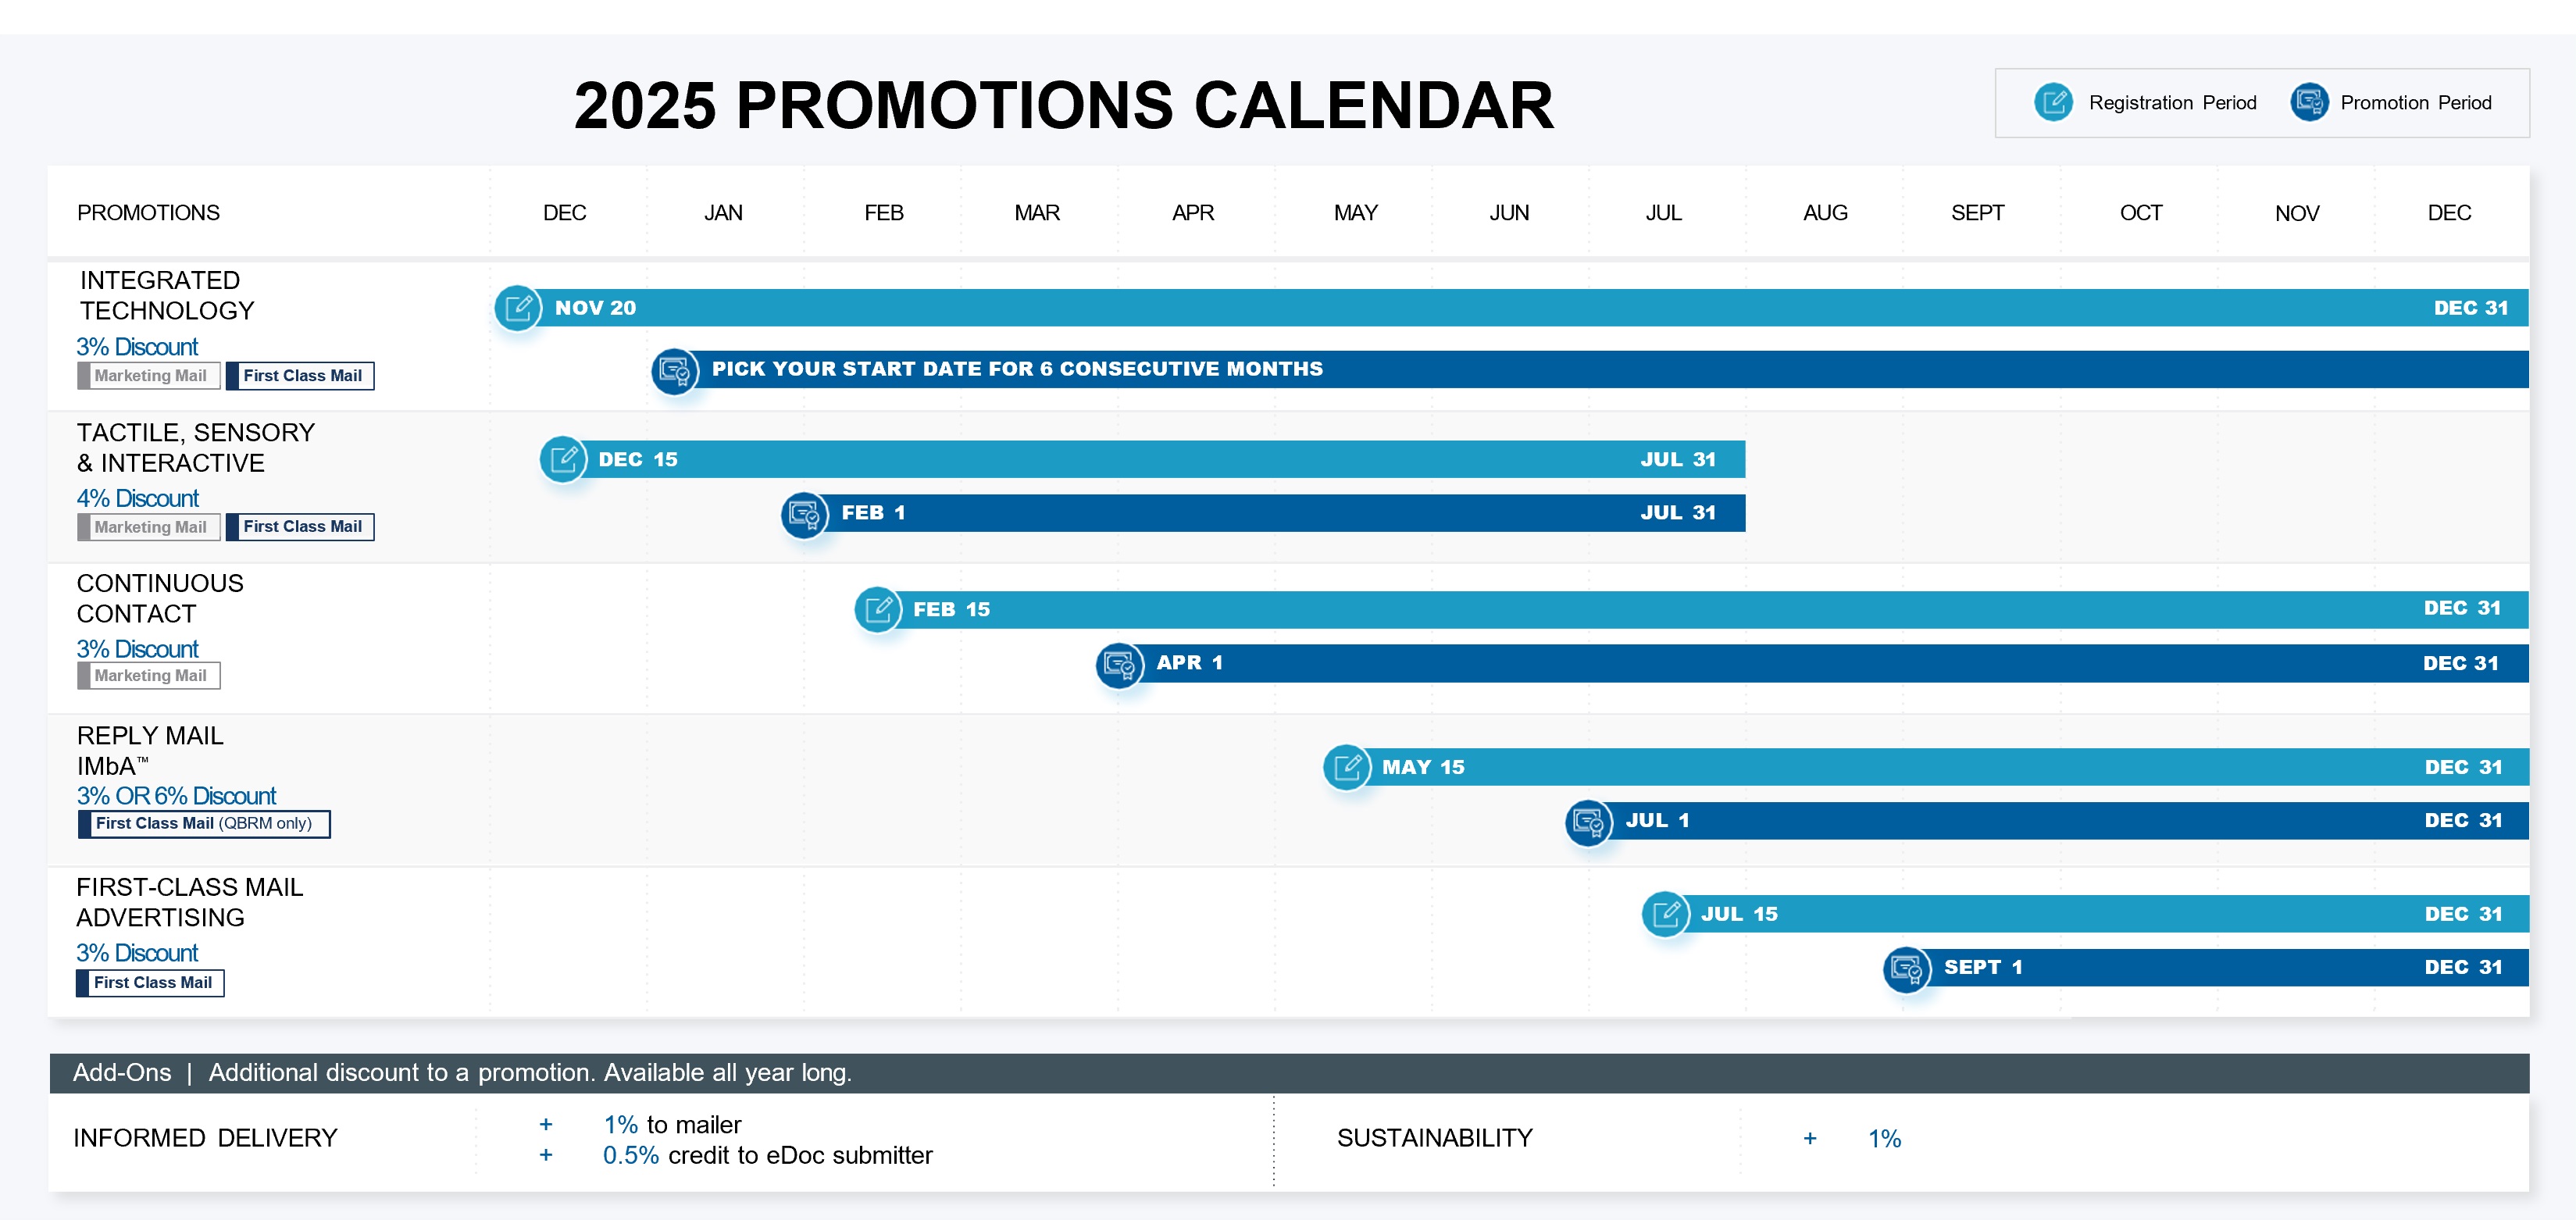 2025 Promotions Calendar